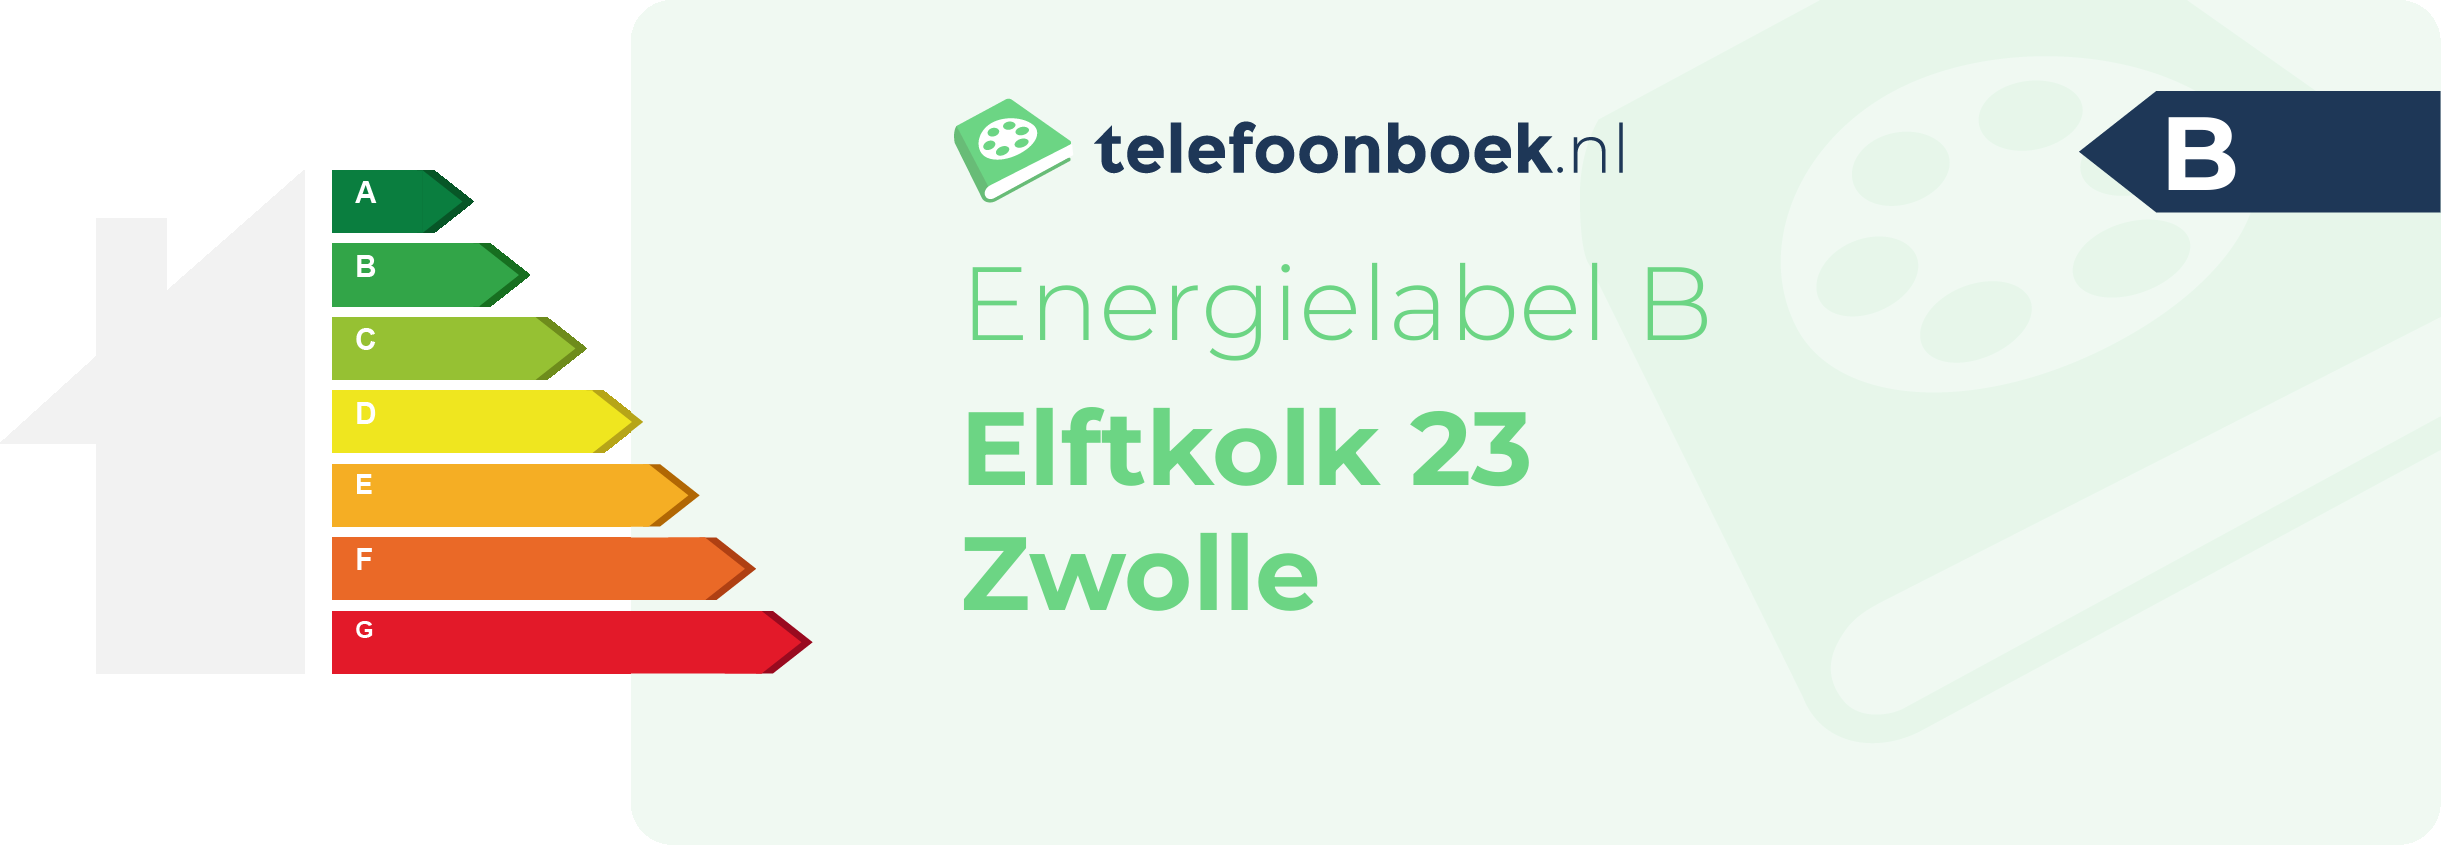 Energielabel Elftkolk 23 Zwolle